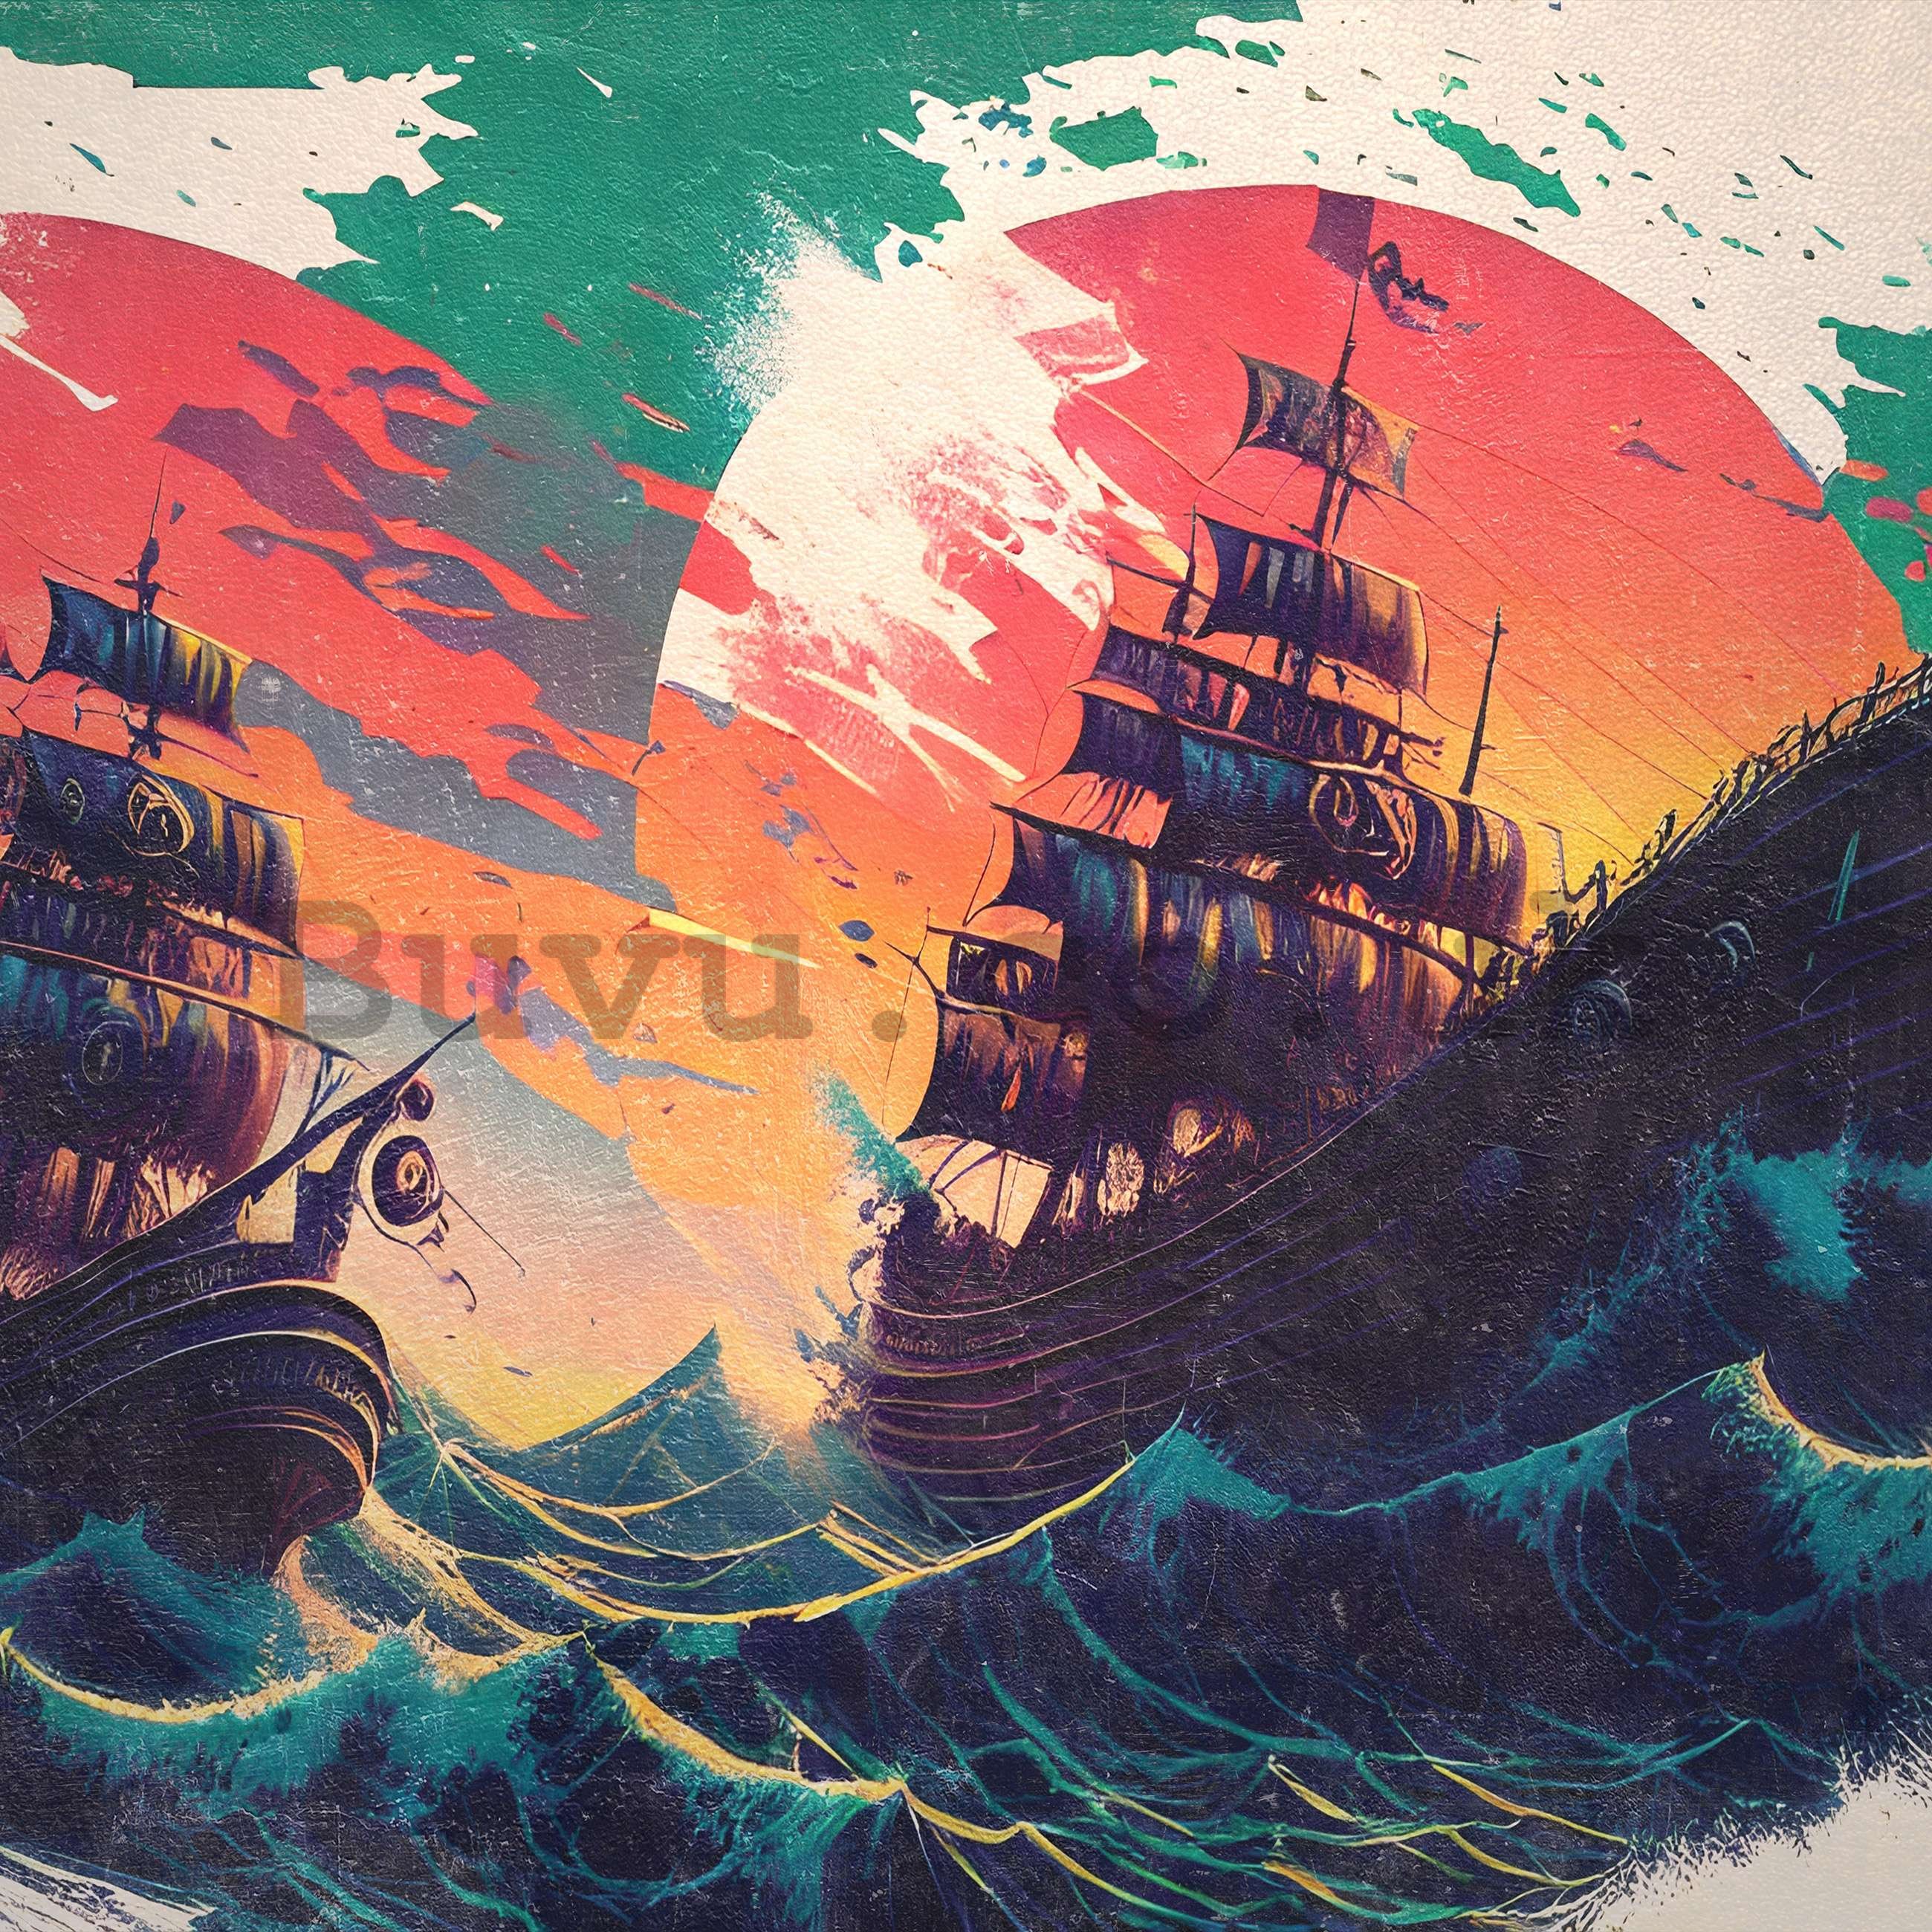 Wall mural vlies: Pirate galleons - 416x254 cm